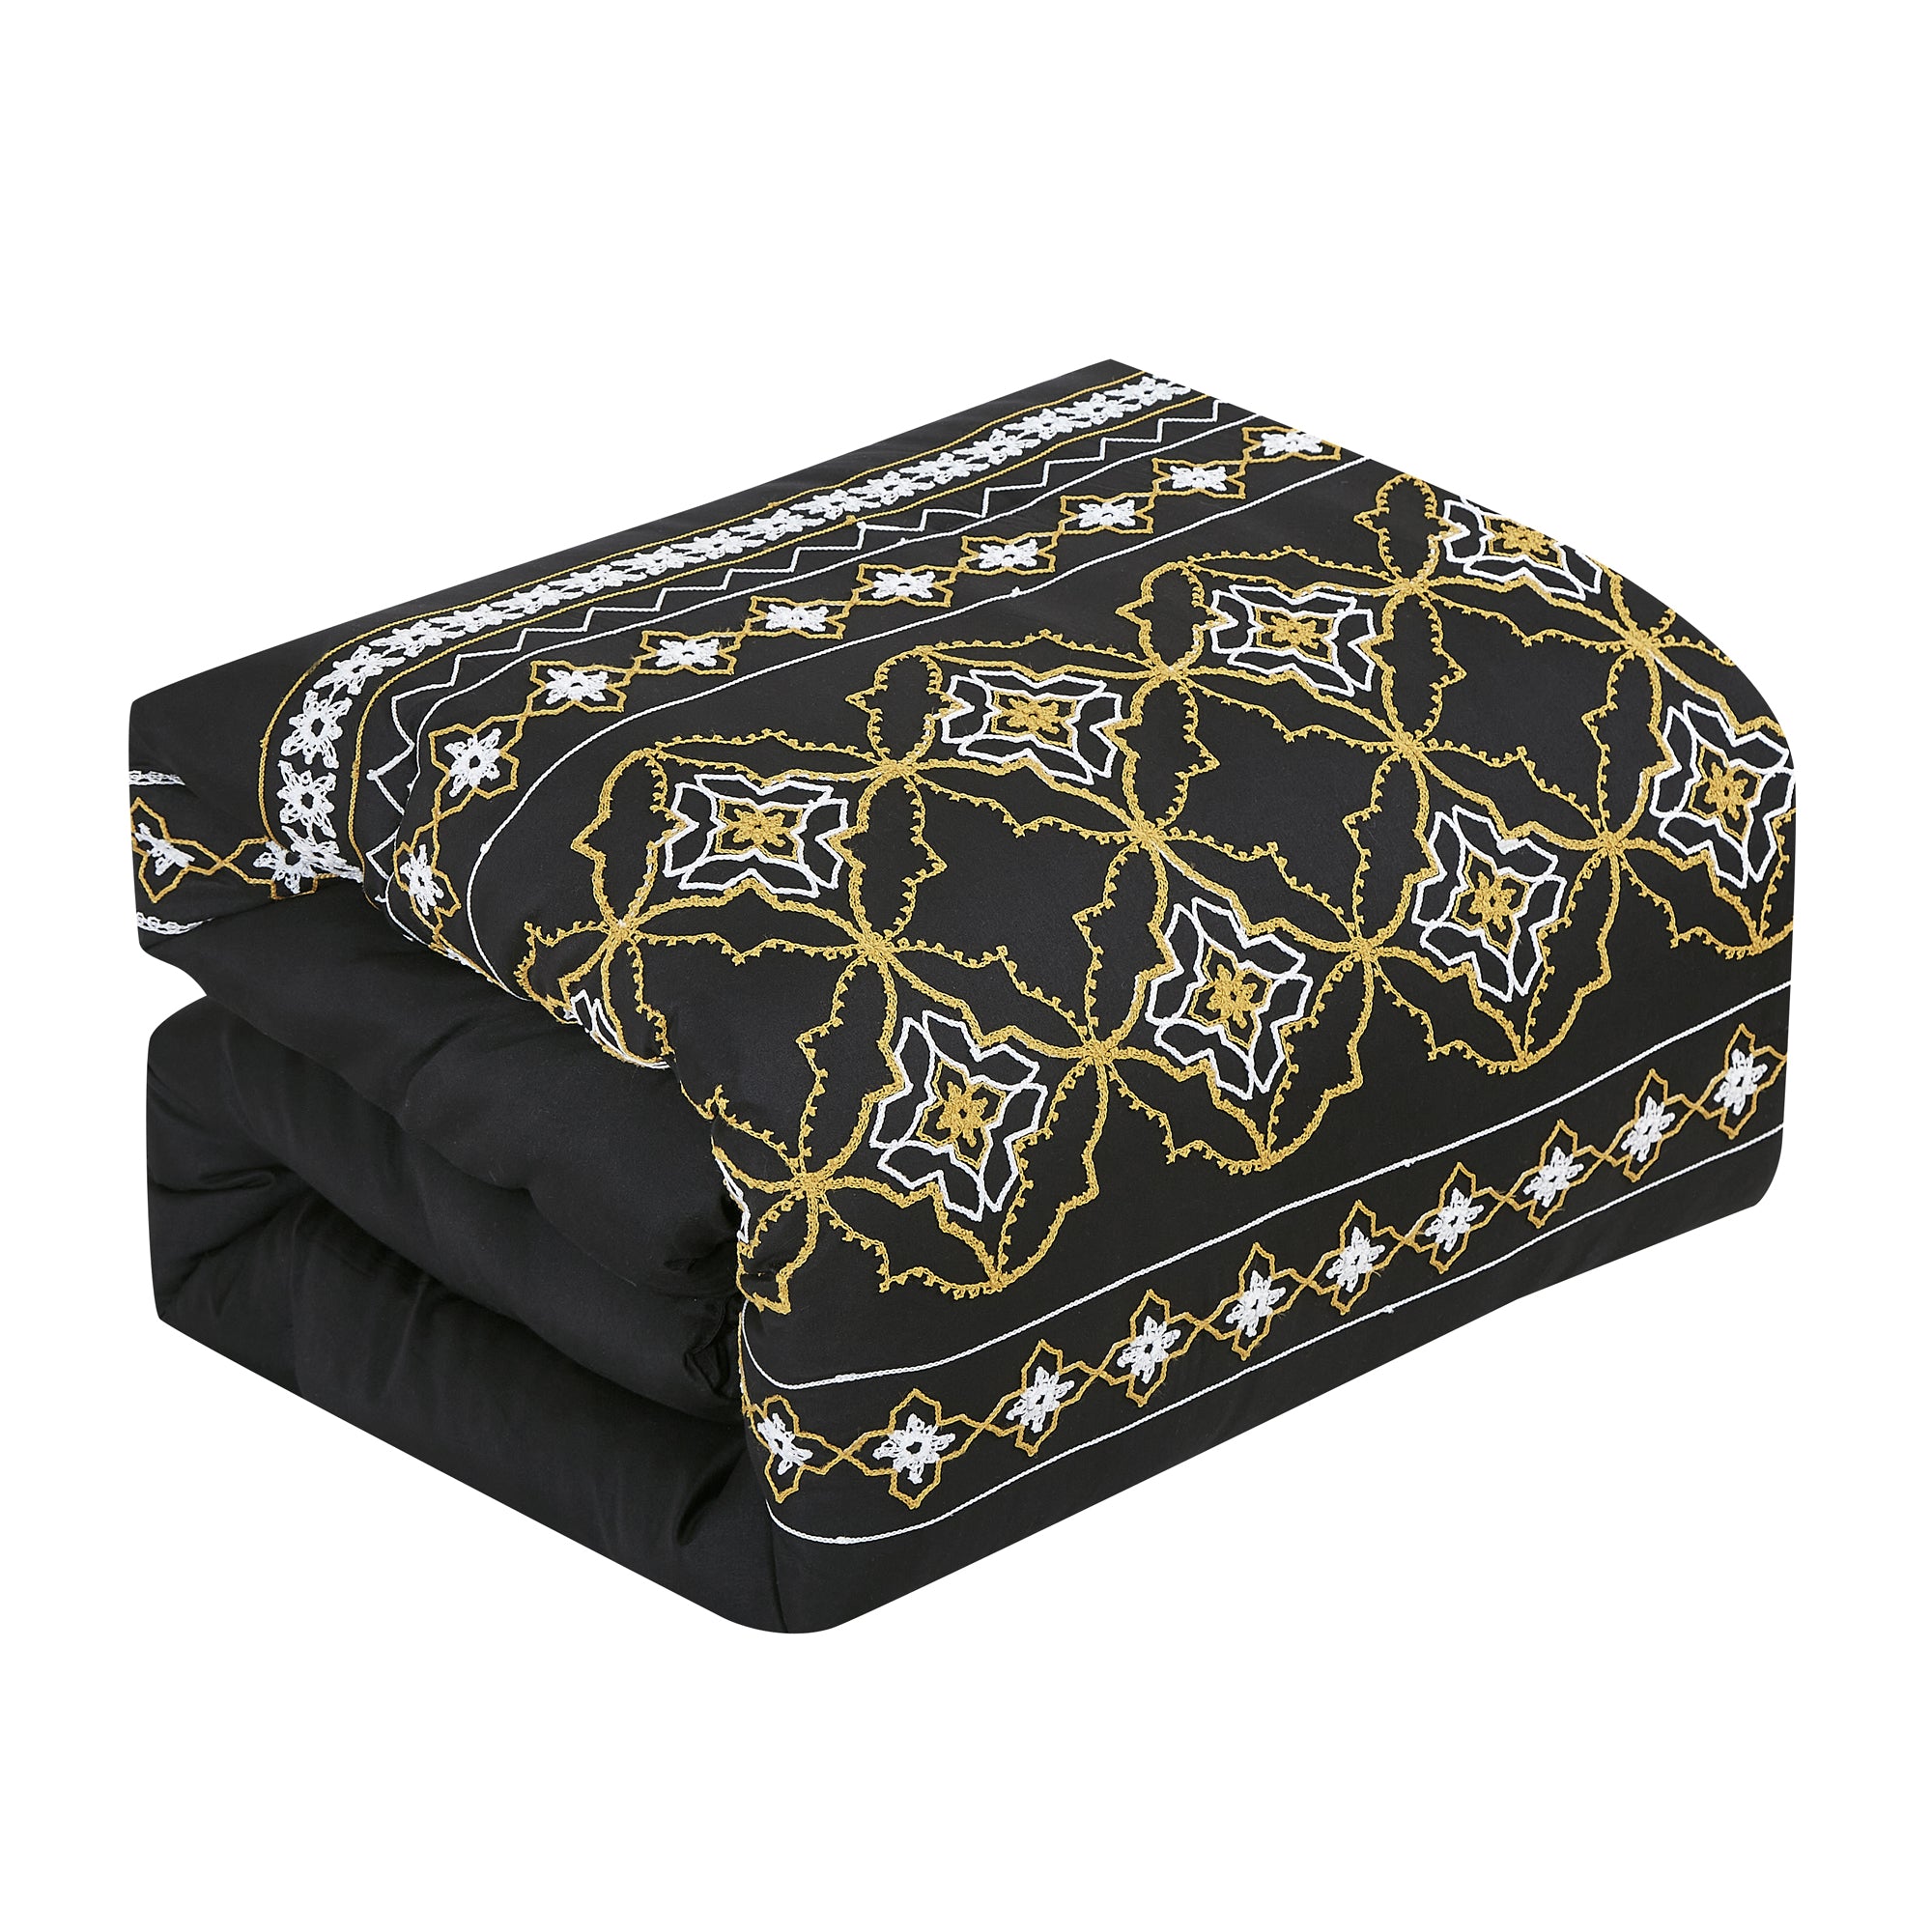 7 PCS Bedding Comforter Set Tzila 2024